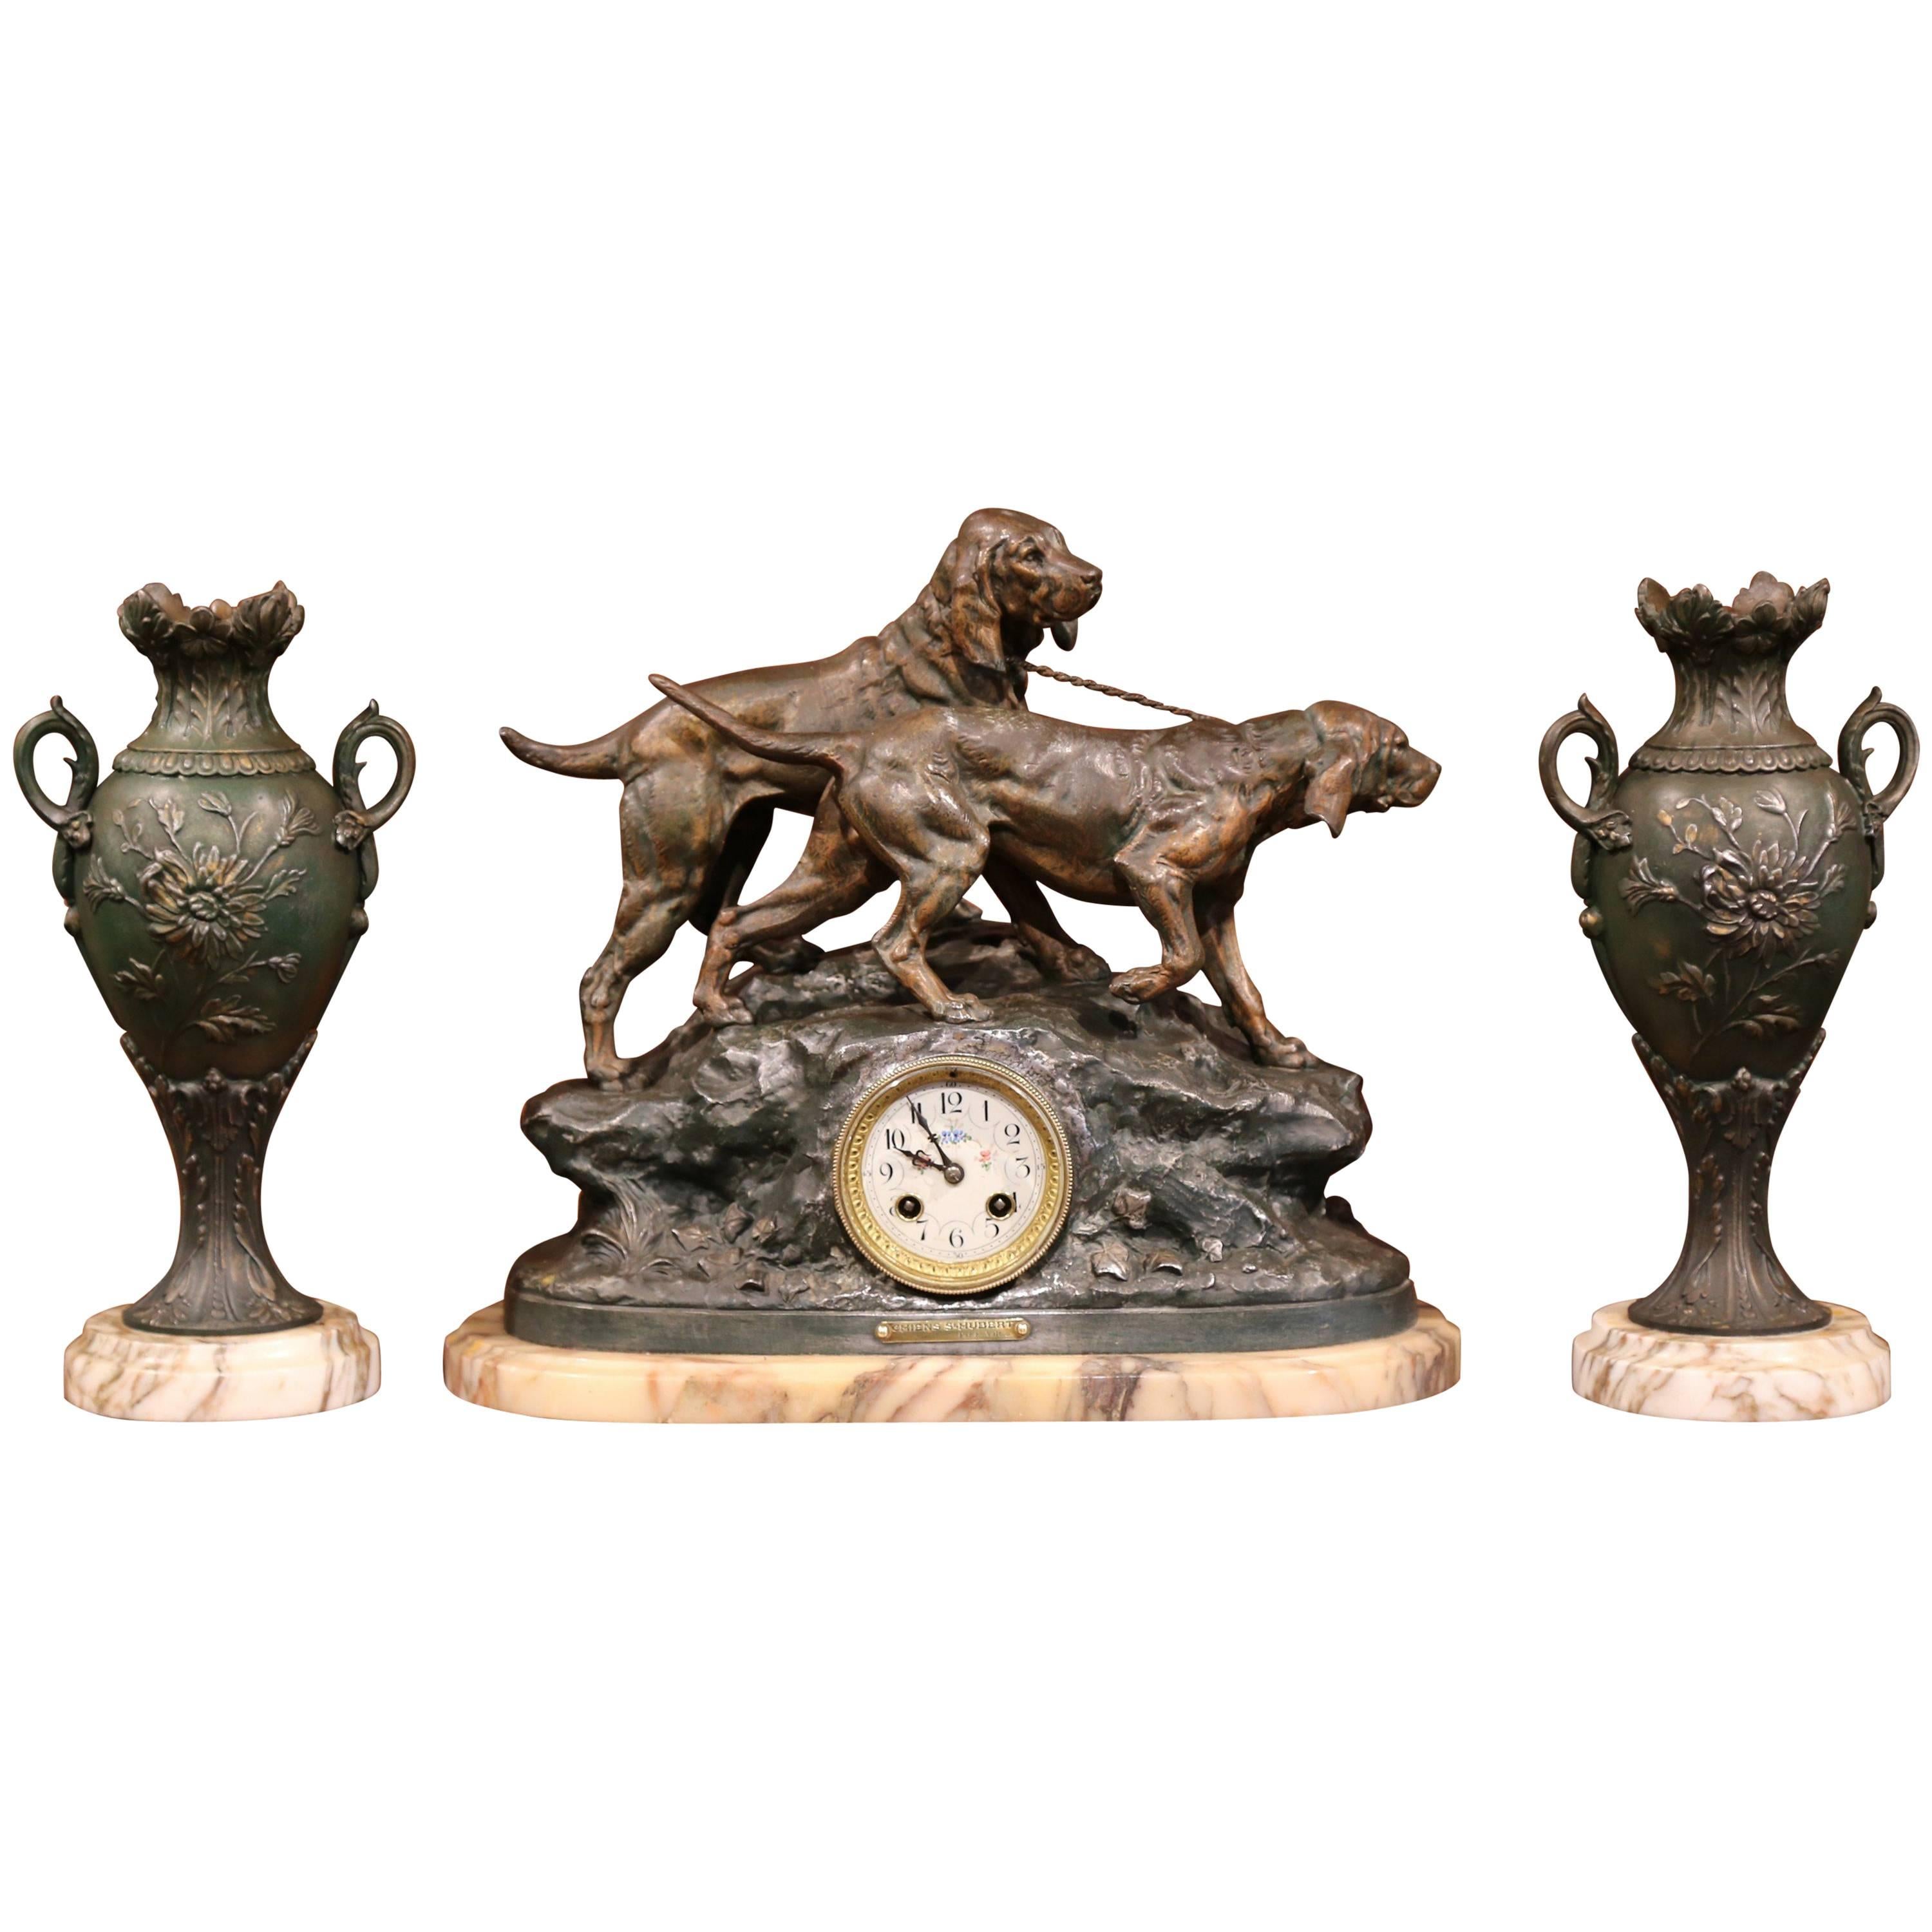 19th Century French Three-Piece Mantel Set Clock with Dogs Signed C. Valton